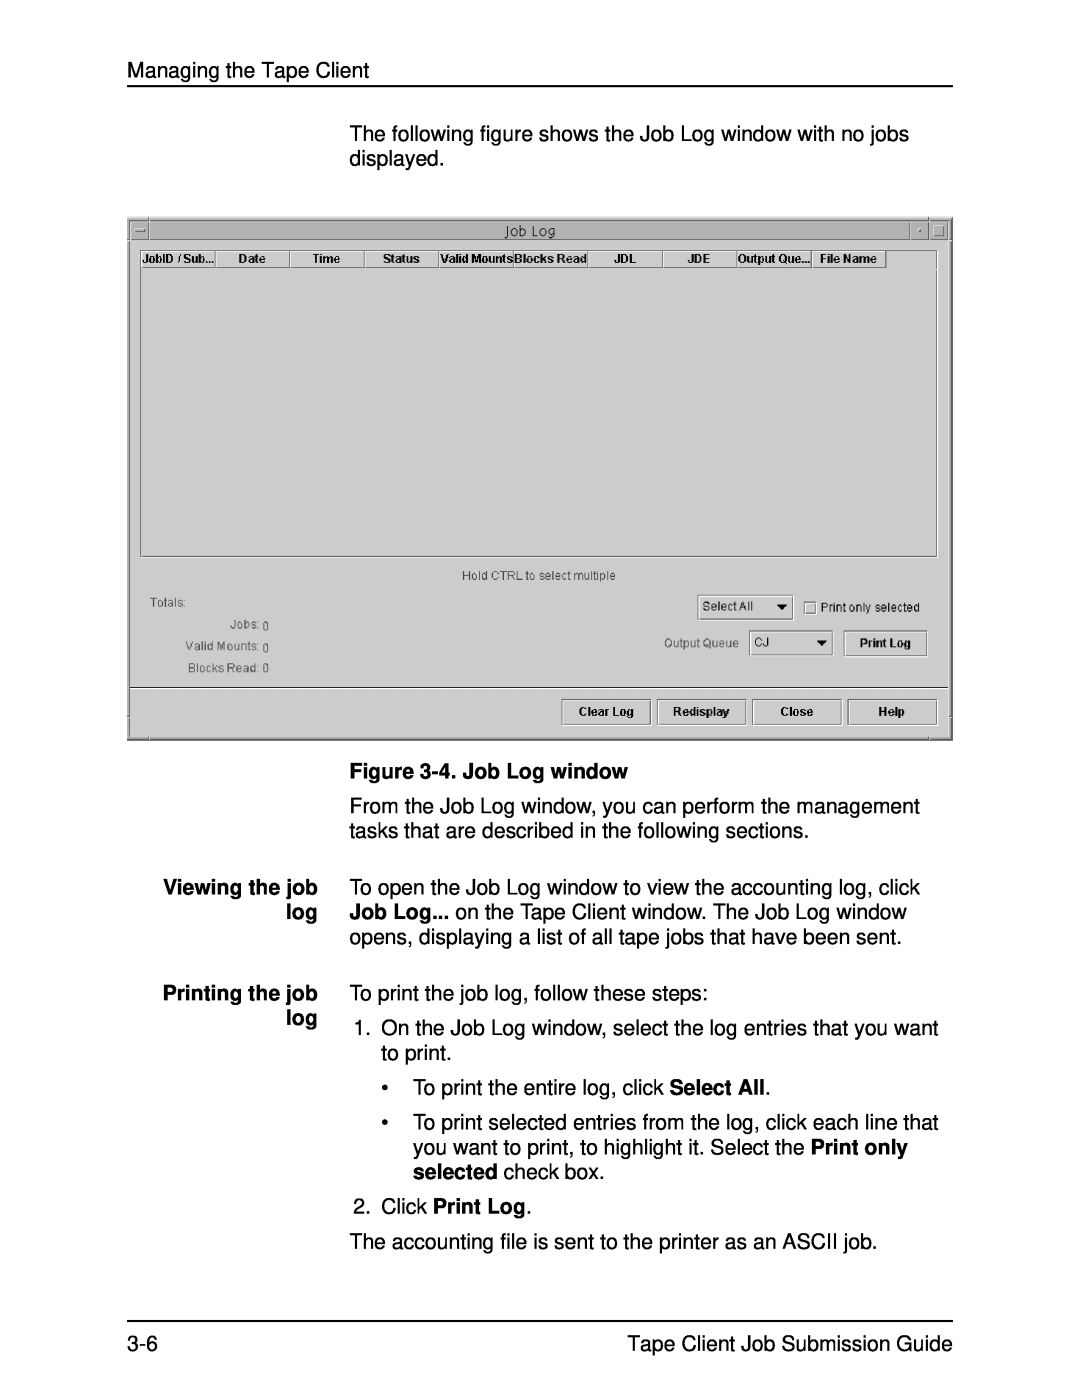 Xerox 701P21110 manual Viewing the job log Printing the job log, 4.Job Log window, Click Print Log 